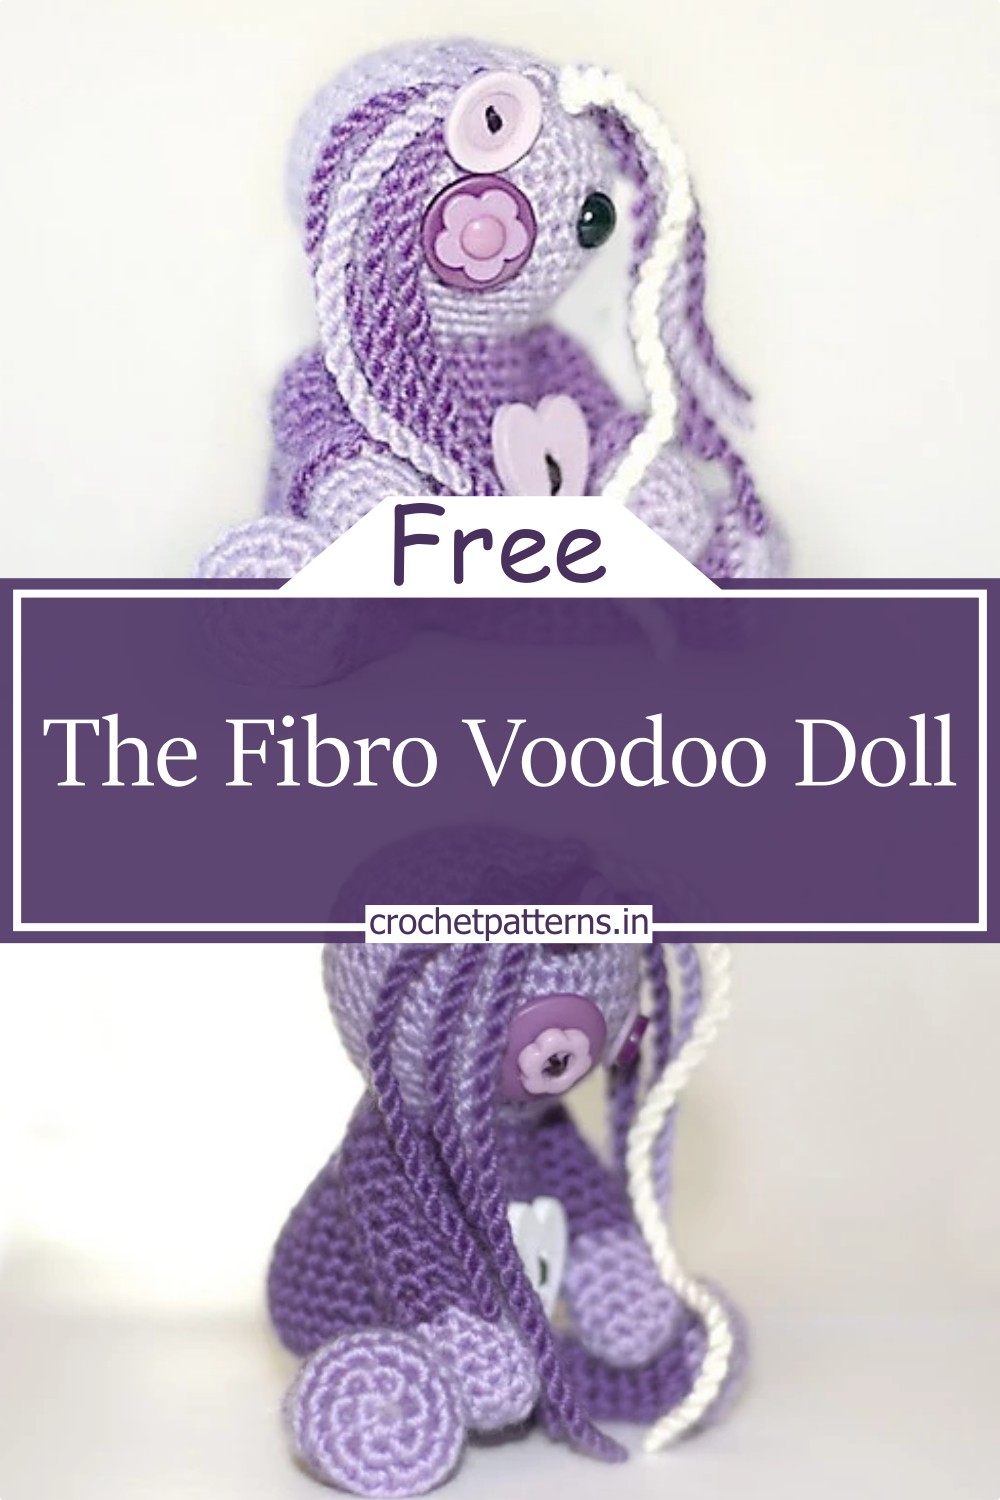 The Fibro Doll creation